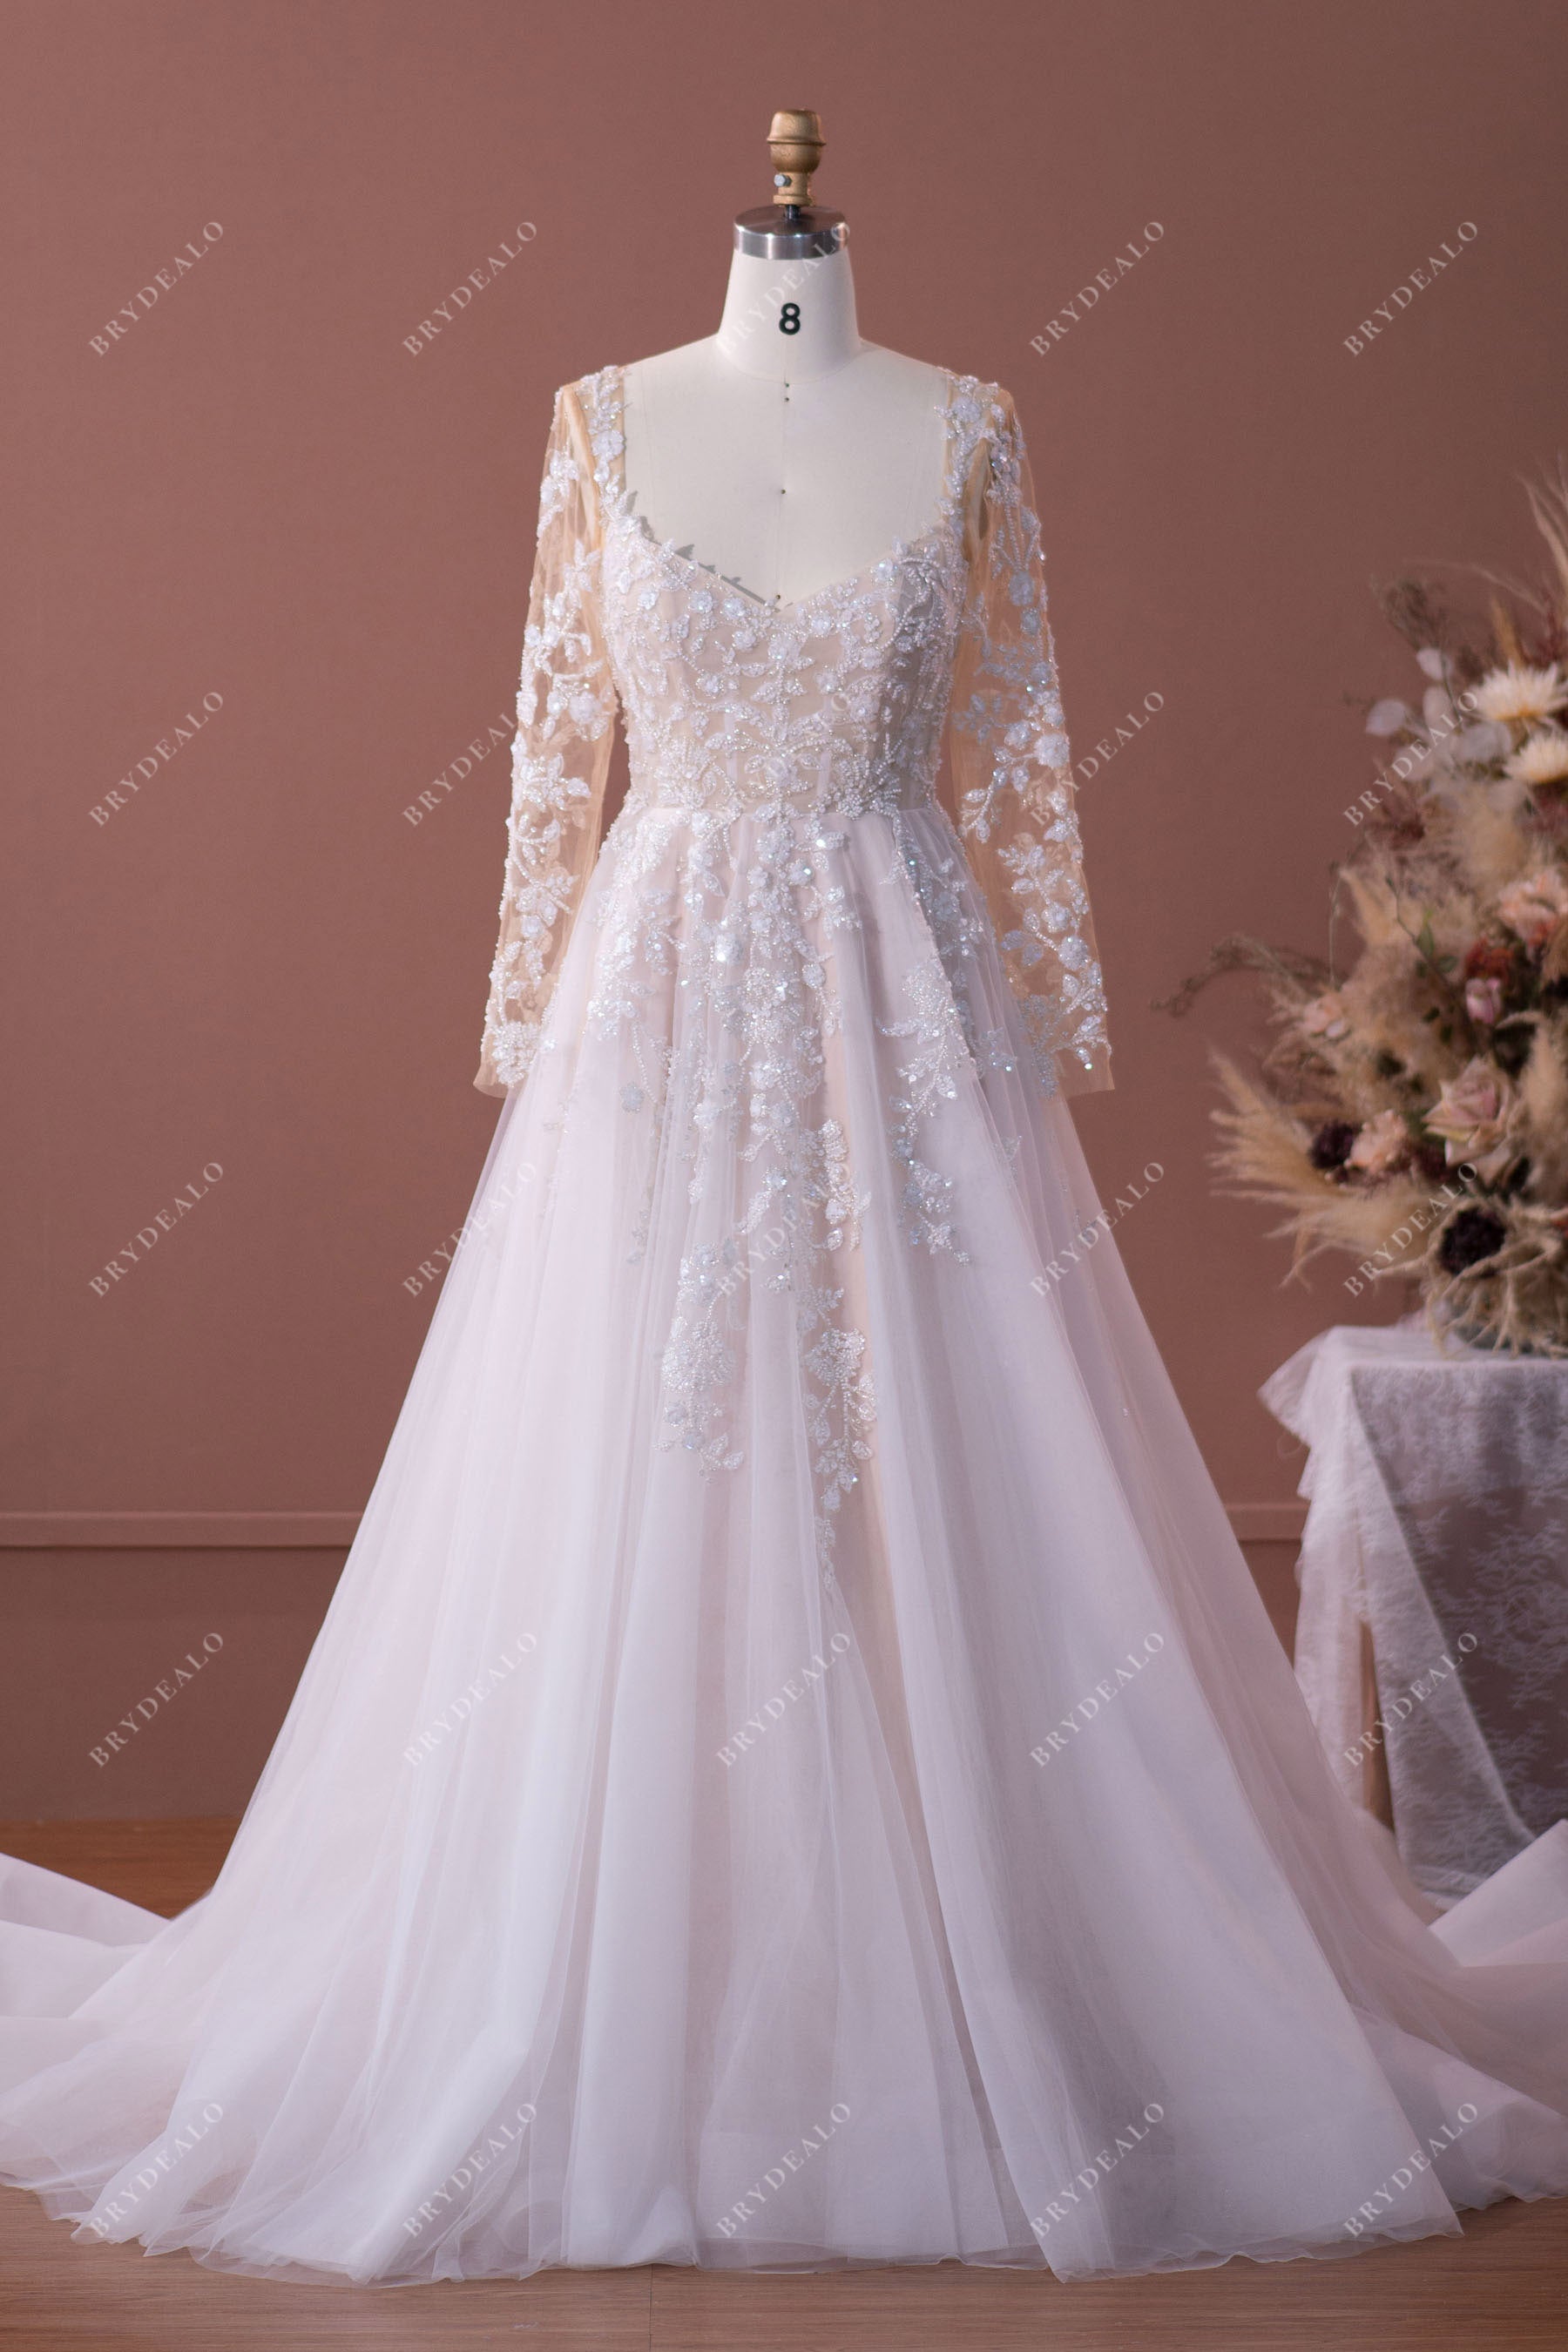 shimmery lace long sleeve wedding dress